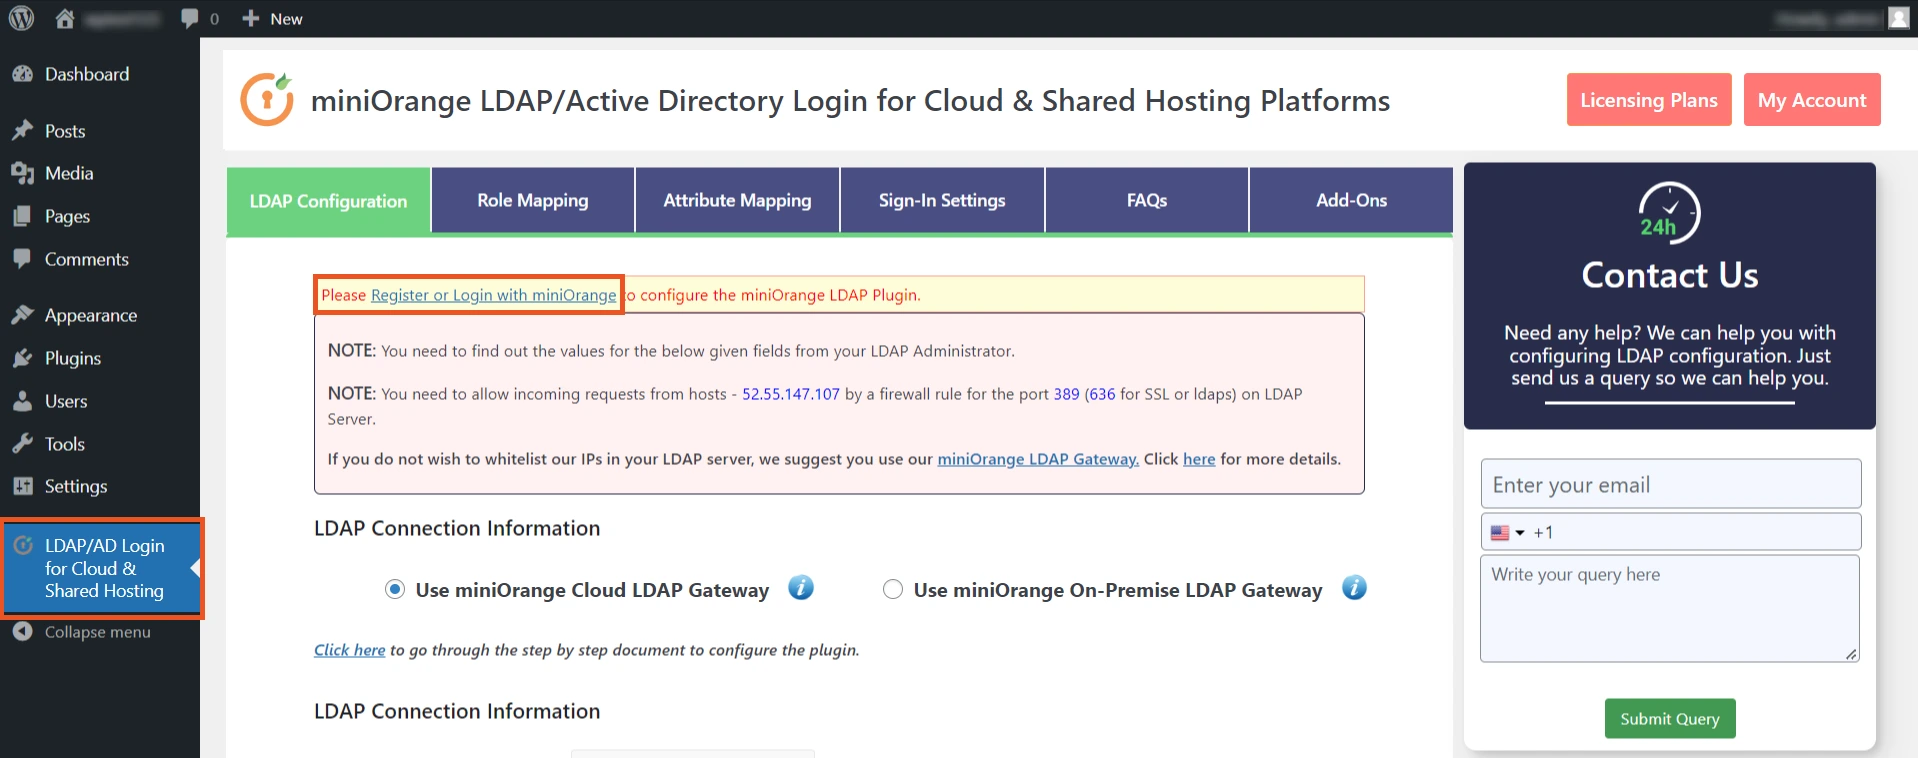 miniOrange register or login for LDAP Cloud active directory/LDAP integration for shared hosting environment plugin to configure